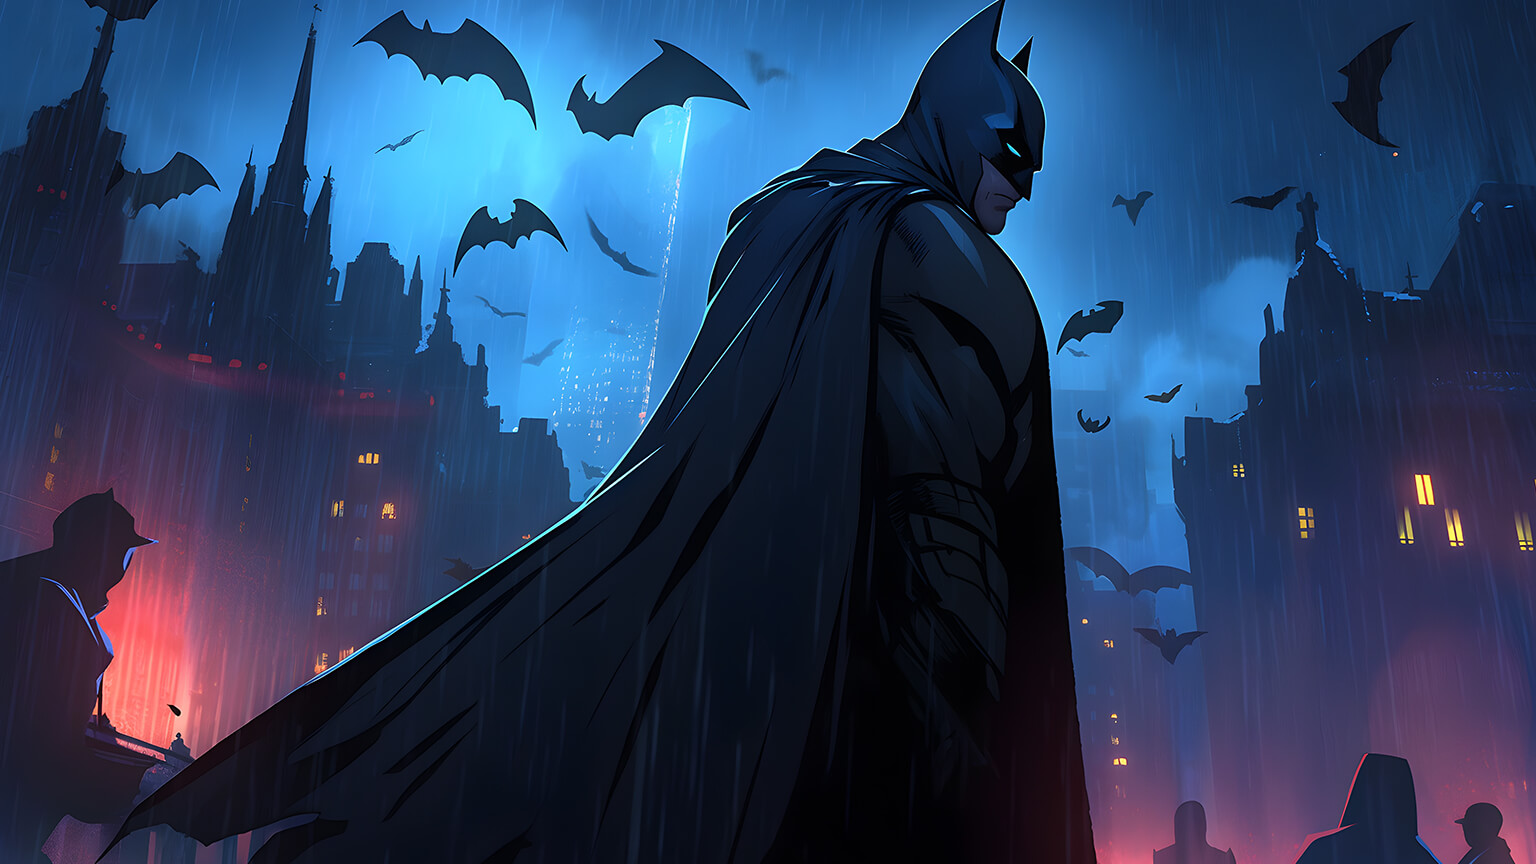 The BATMAN (pc wallpaper) in 2023  Hd batman wallpaper, Batman wallpaper,  4k wallpapers for pc